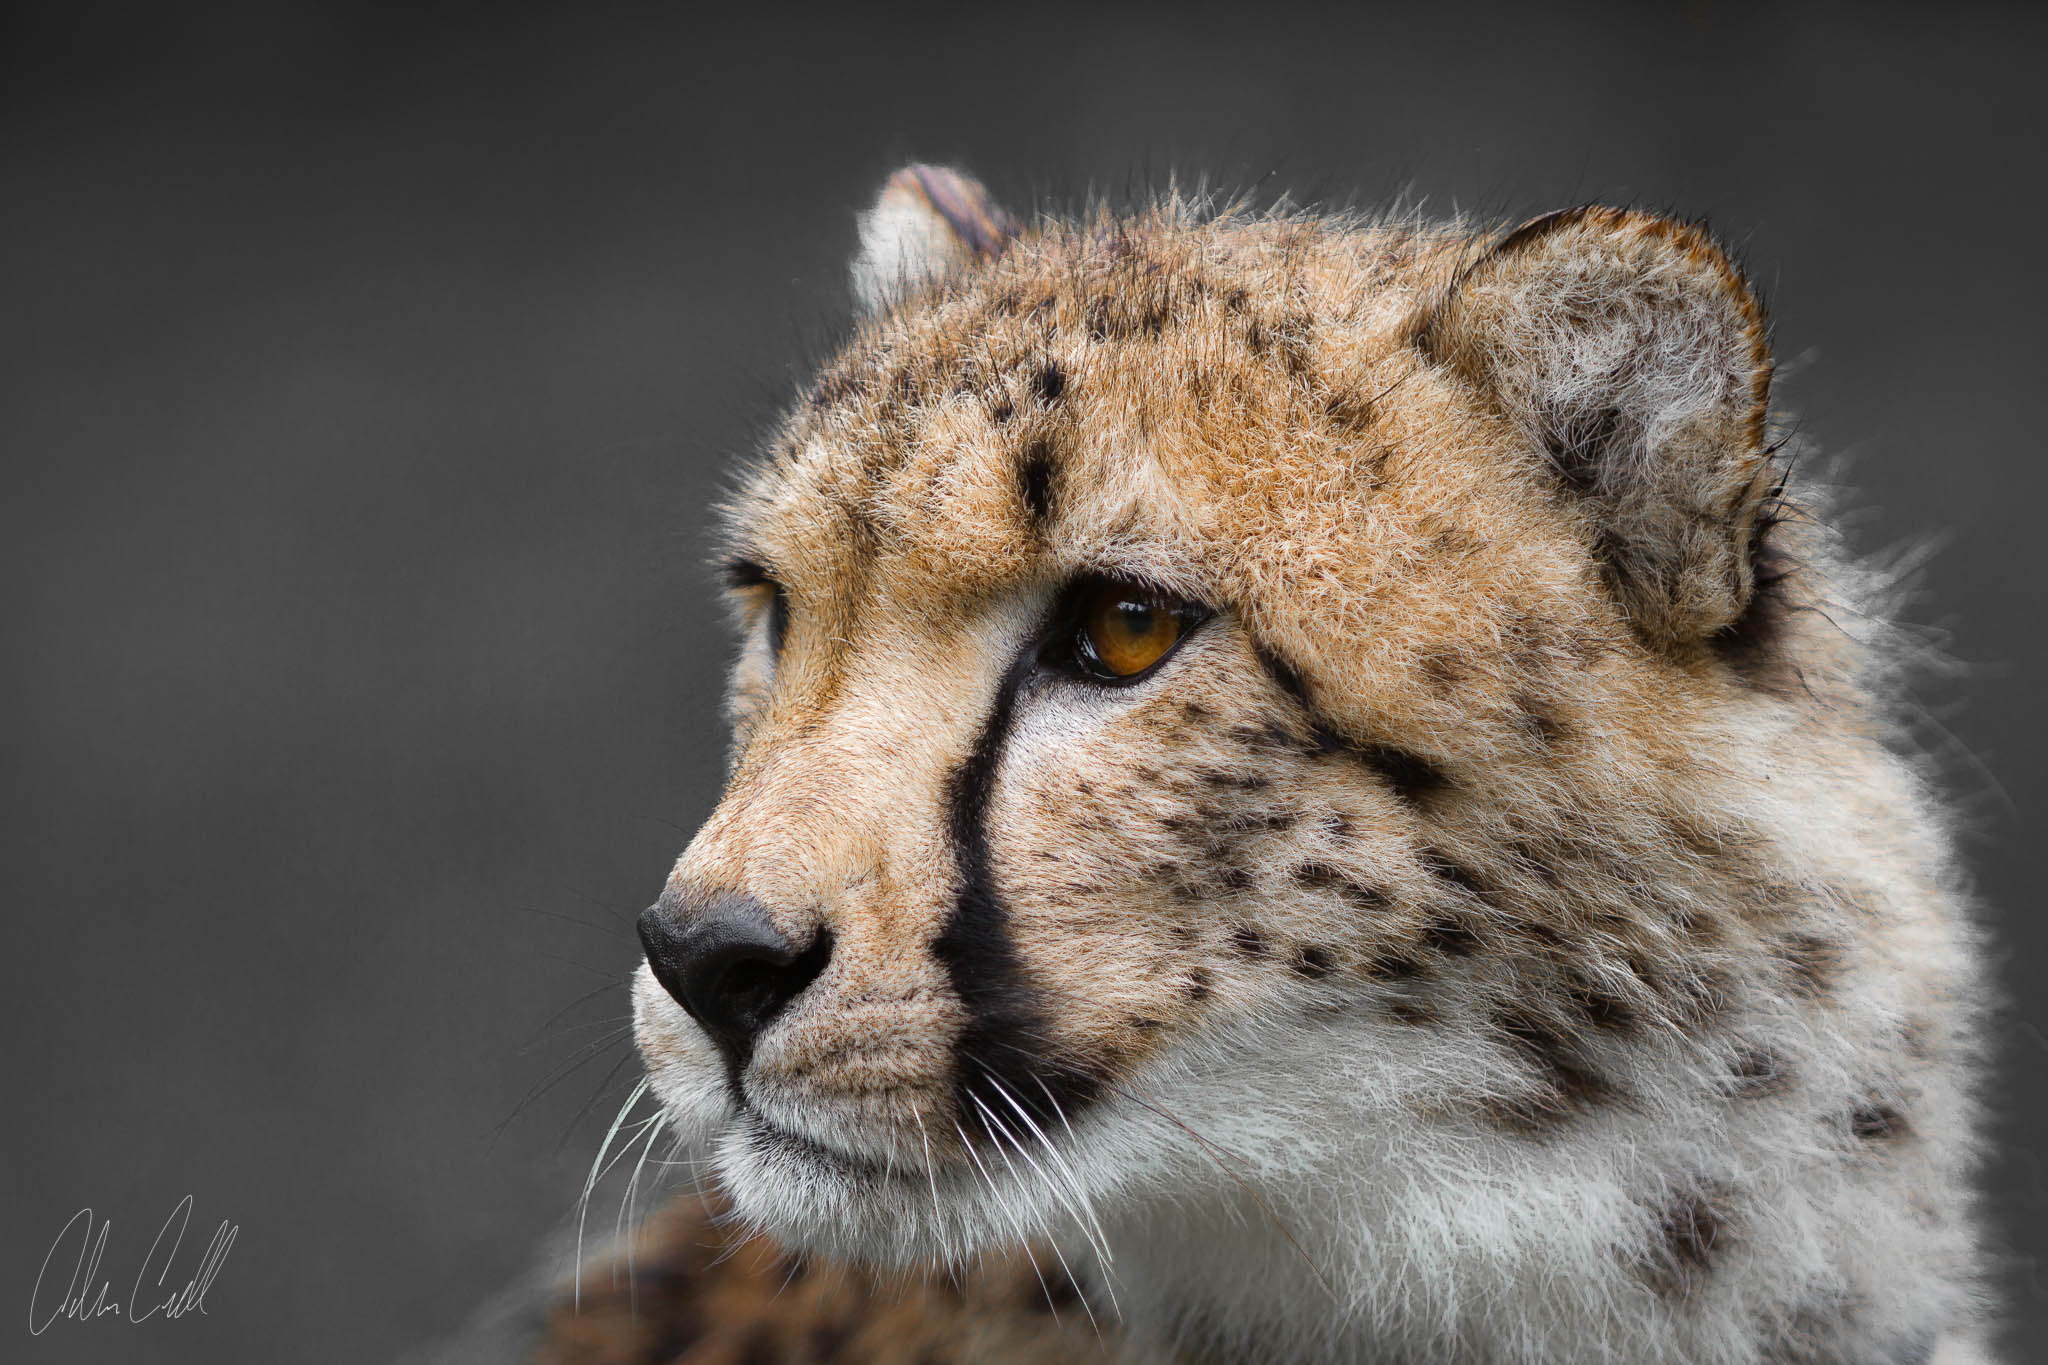  Cheetah #20130527_0059-3 